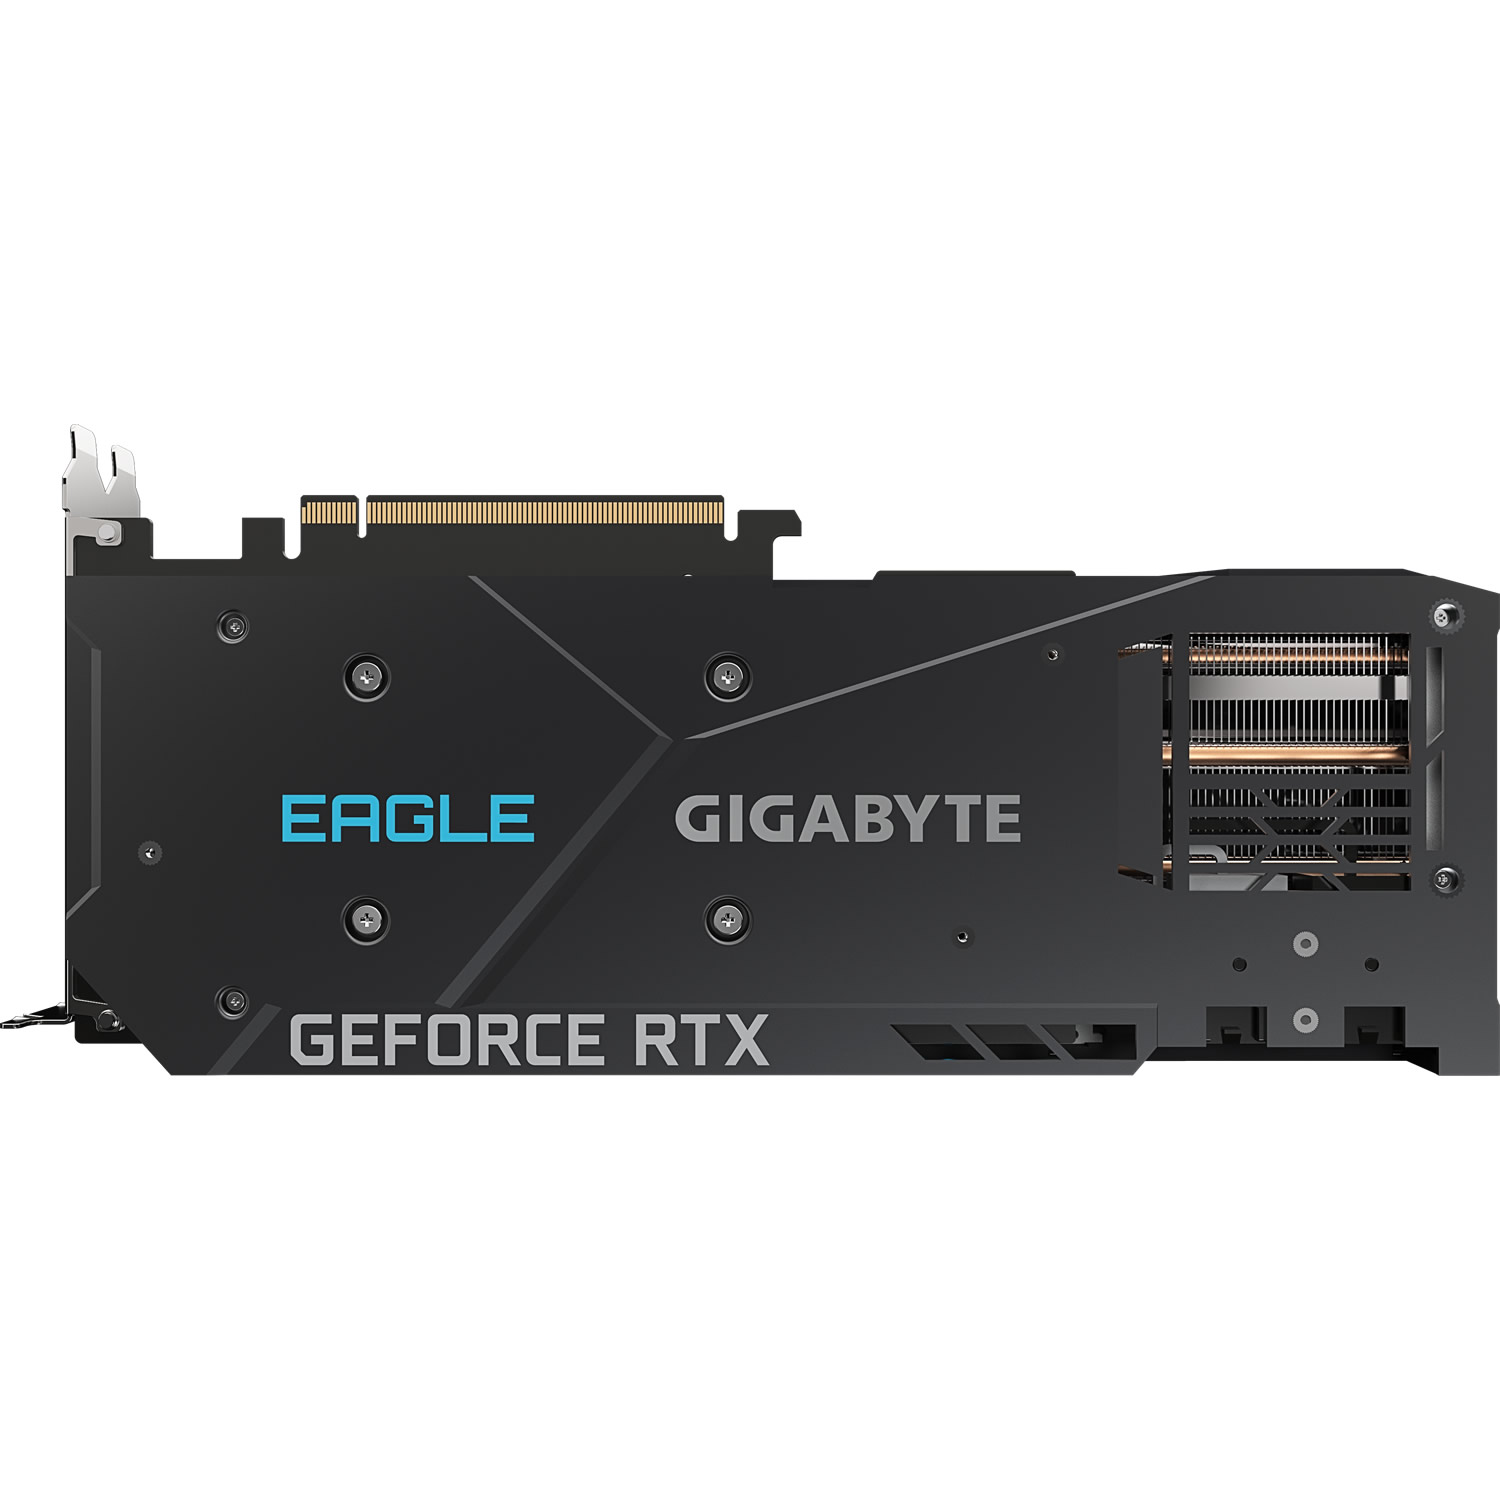 Gigabyte - Gigabyte GeForce RTX 3070 Eagle V2 LHR 8GB GDDR6 PCI-Express Graphics Card